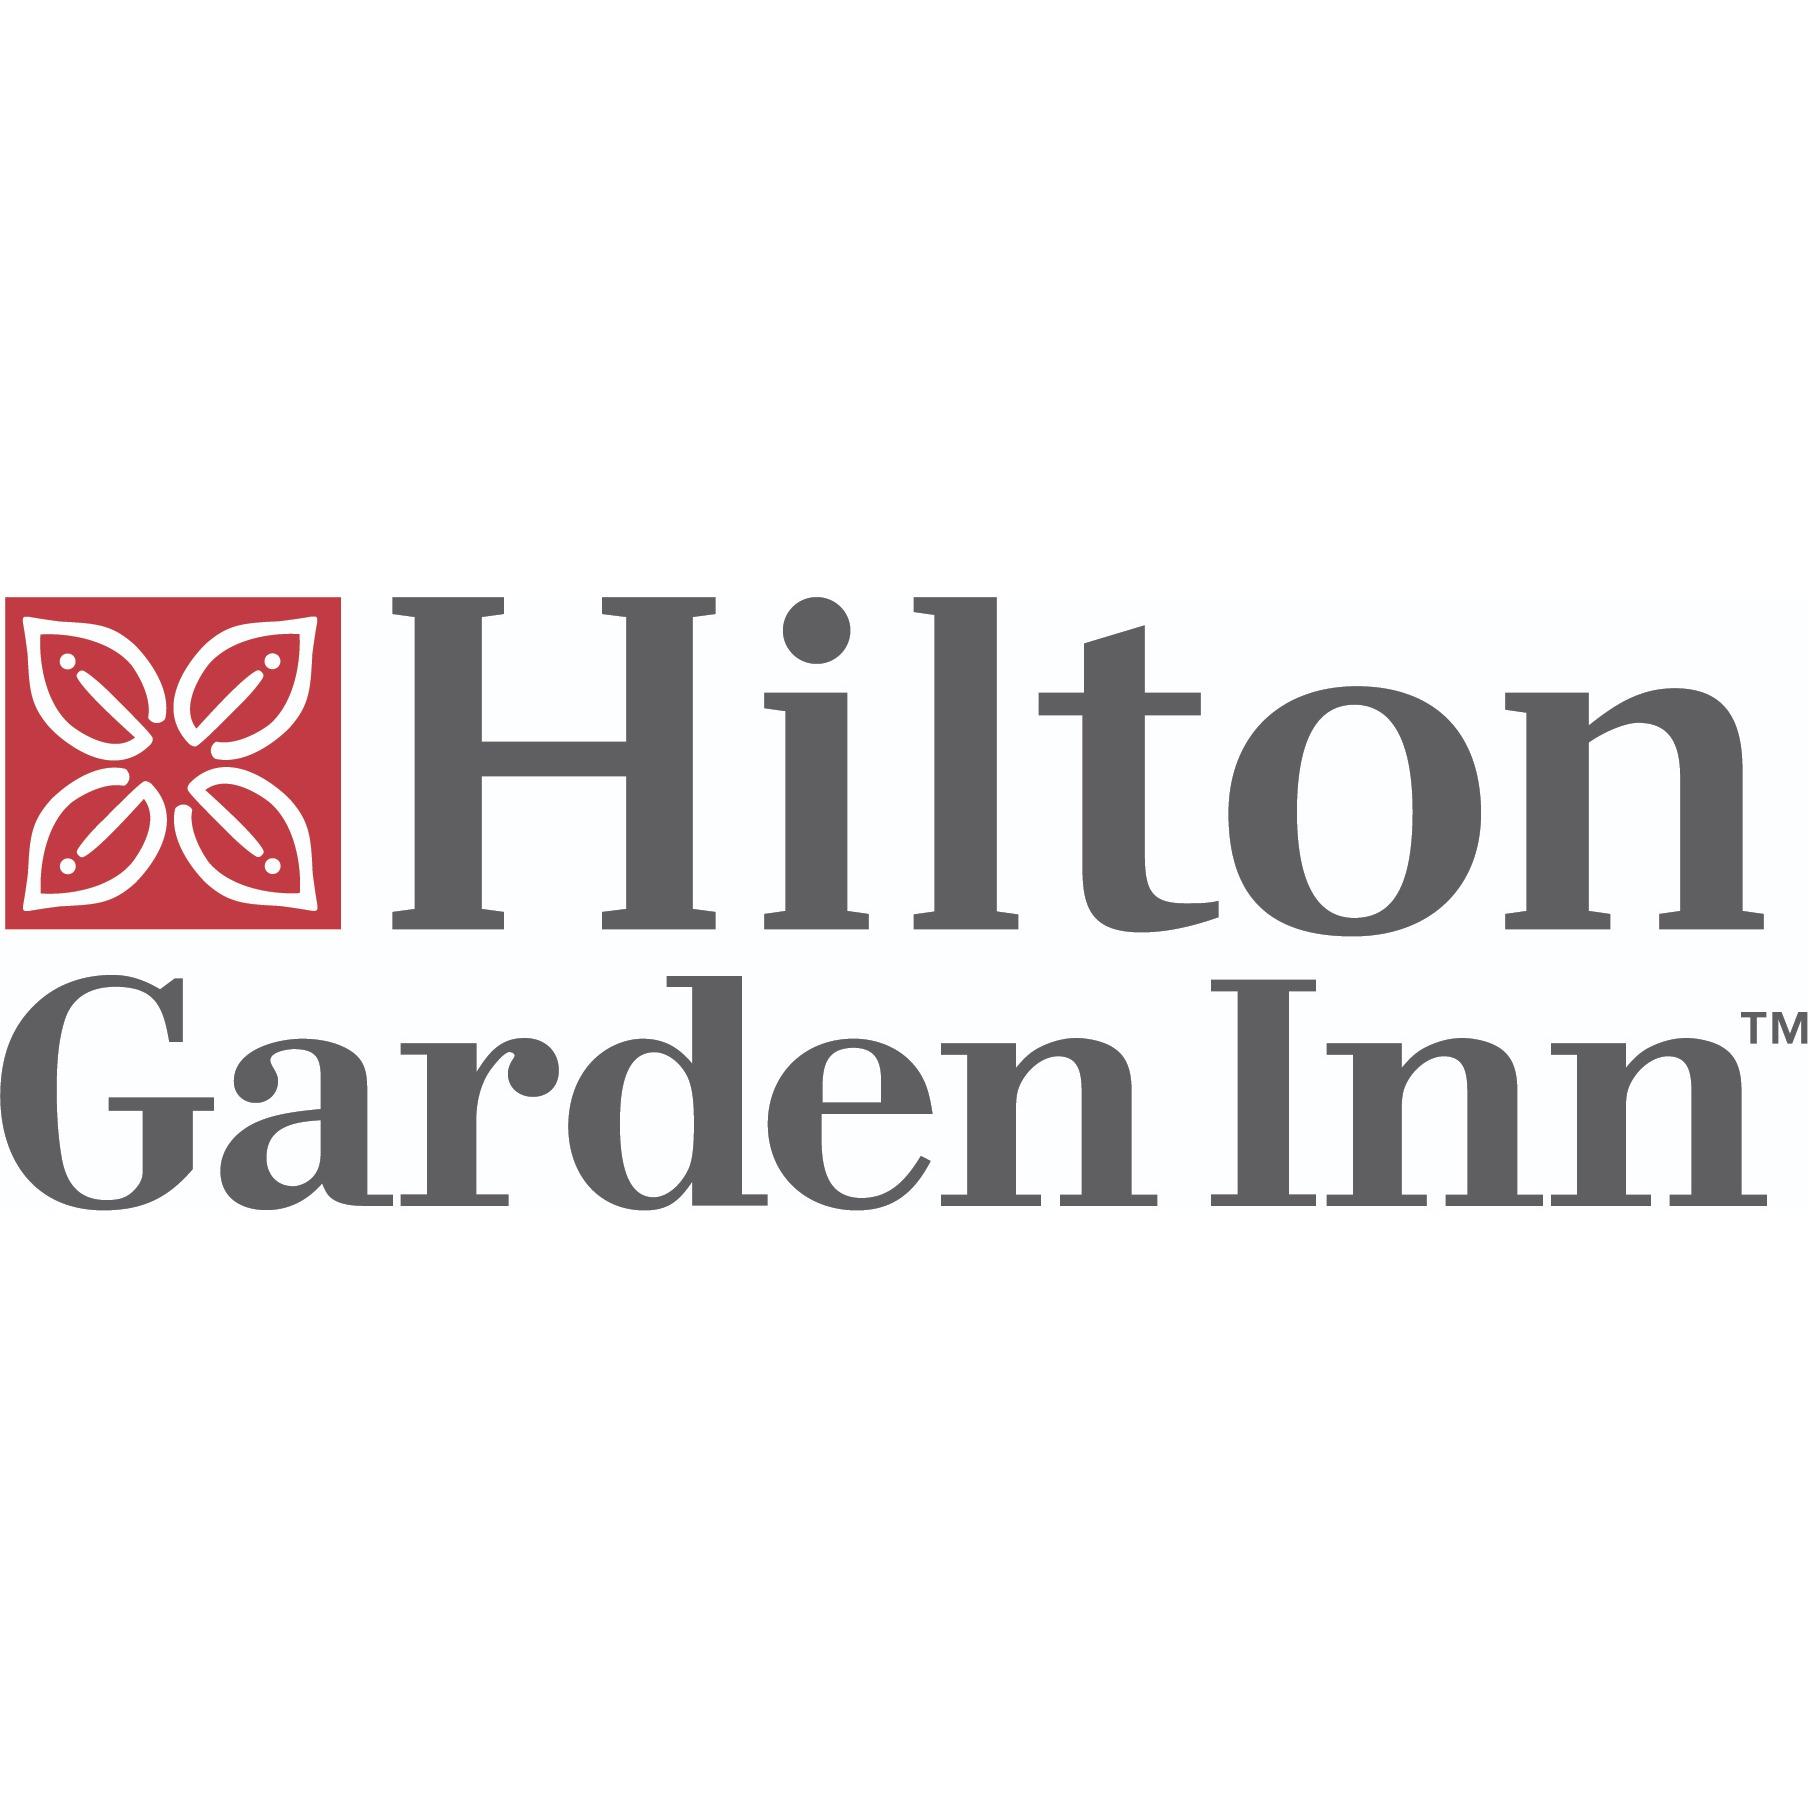 Hilton Garden Inn Birmingham SE/Liberty Park - Birmingham, AL 35242 - (205)503-5220 | ShowMeLocal.com